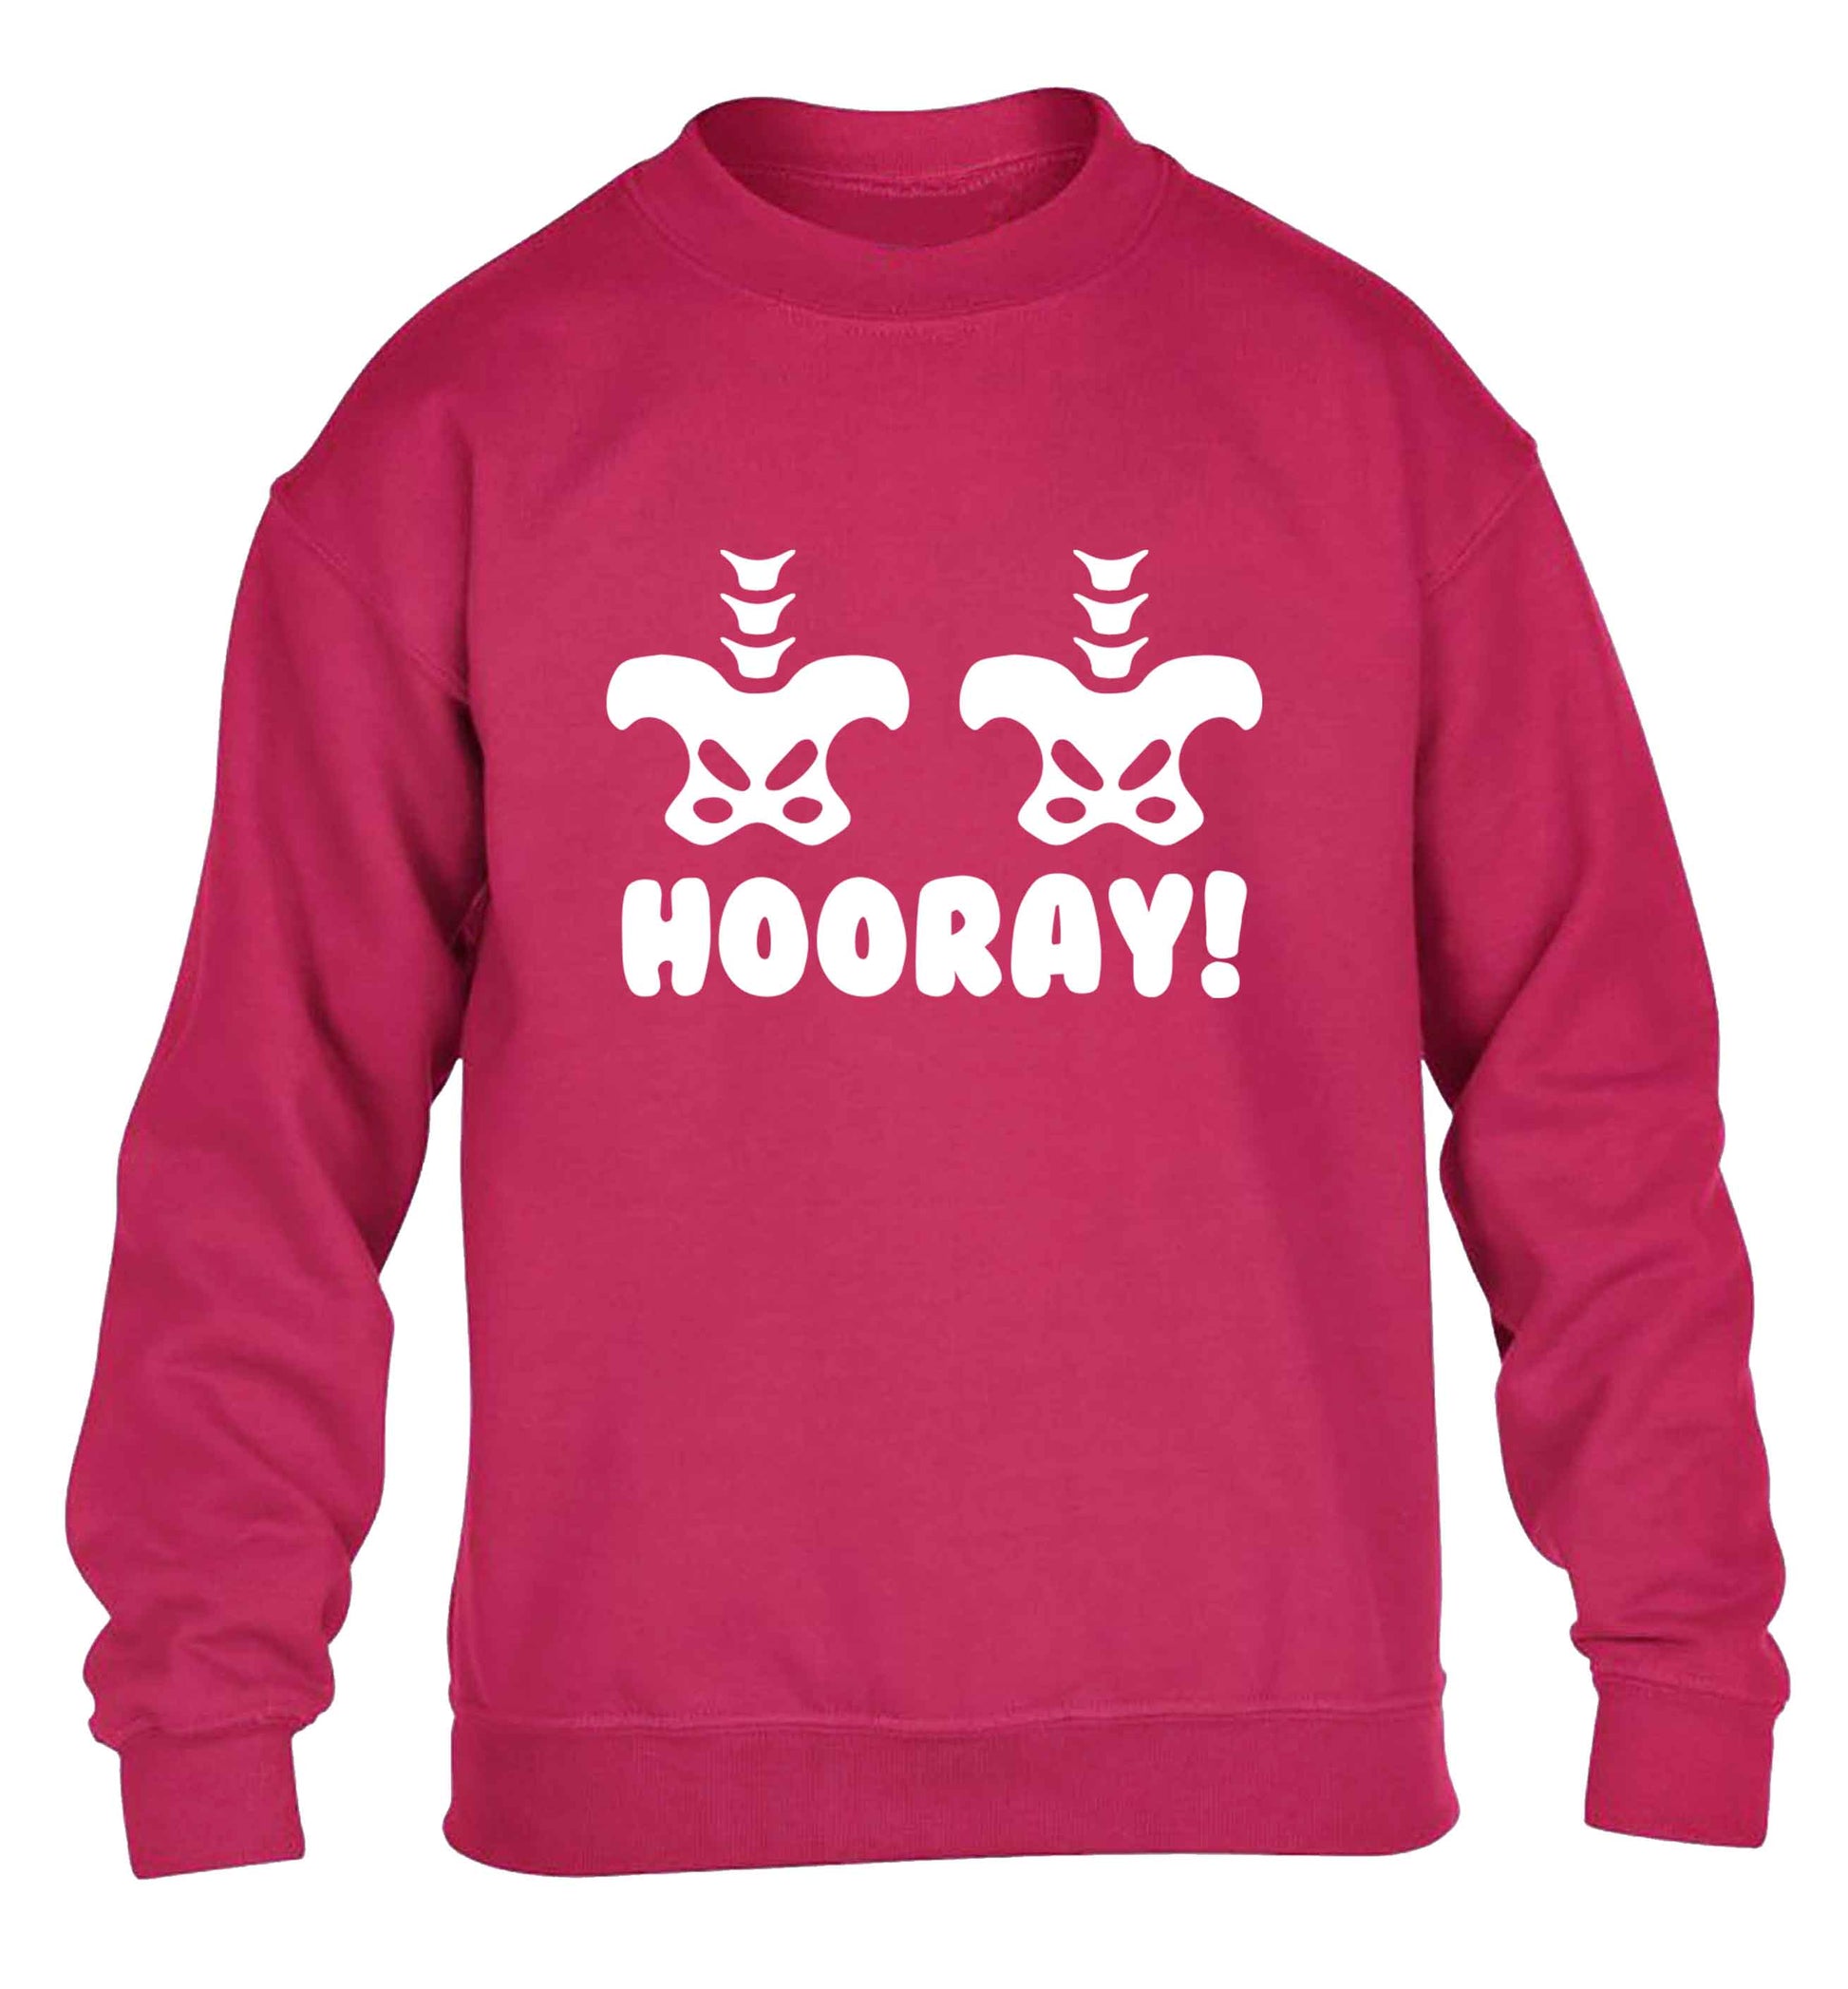 Hip Hip Hooray! children's pink sweater 12-13 Years